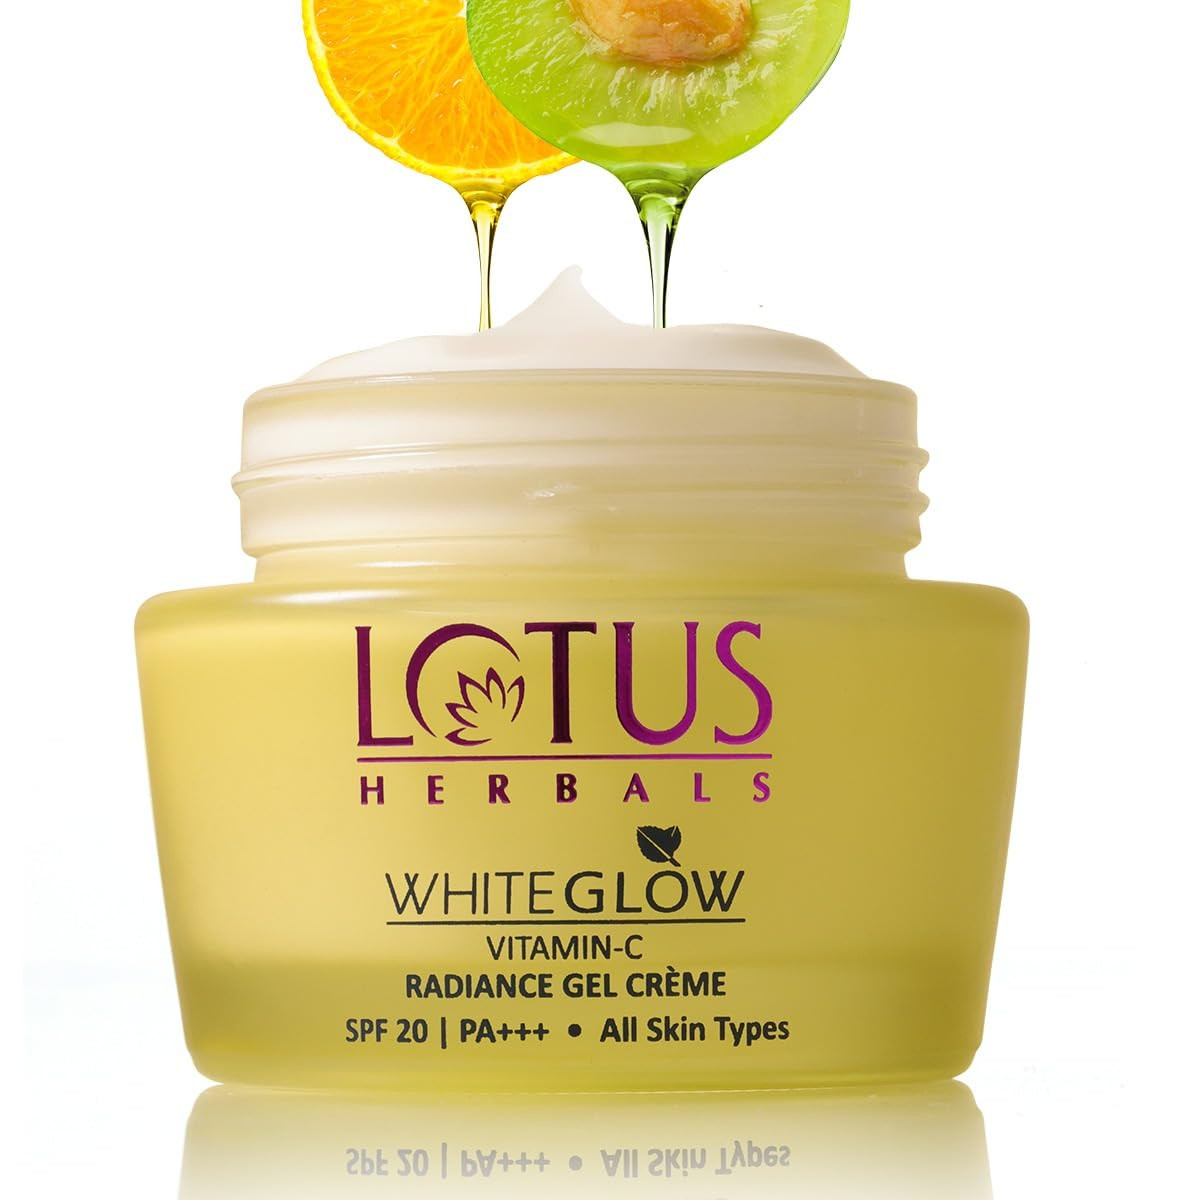 Lotus Herbals Whiteglow Vitamin-C Radiance Gel Crème, SPF-20 | PA+++, All Skin Types Paraben-Free, Anti-Pollution | 50g